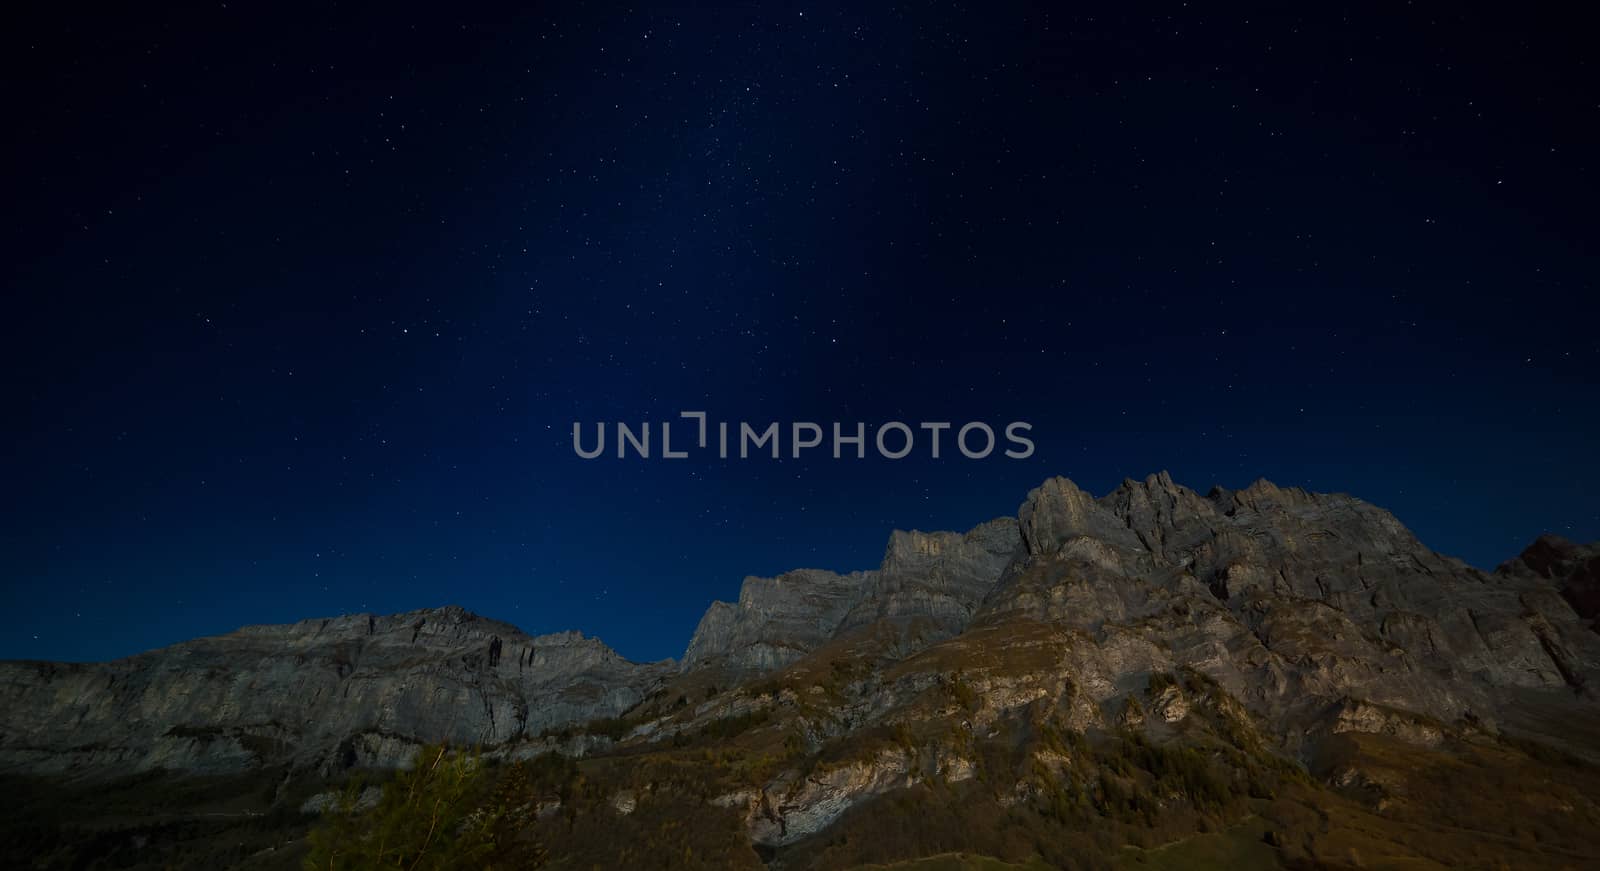 Starry night above the Daubenhorn mountain, Leukerbad, Switzerland.